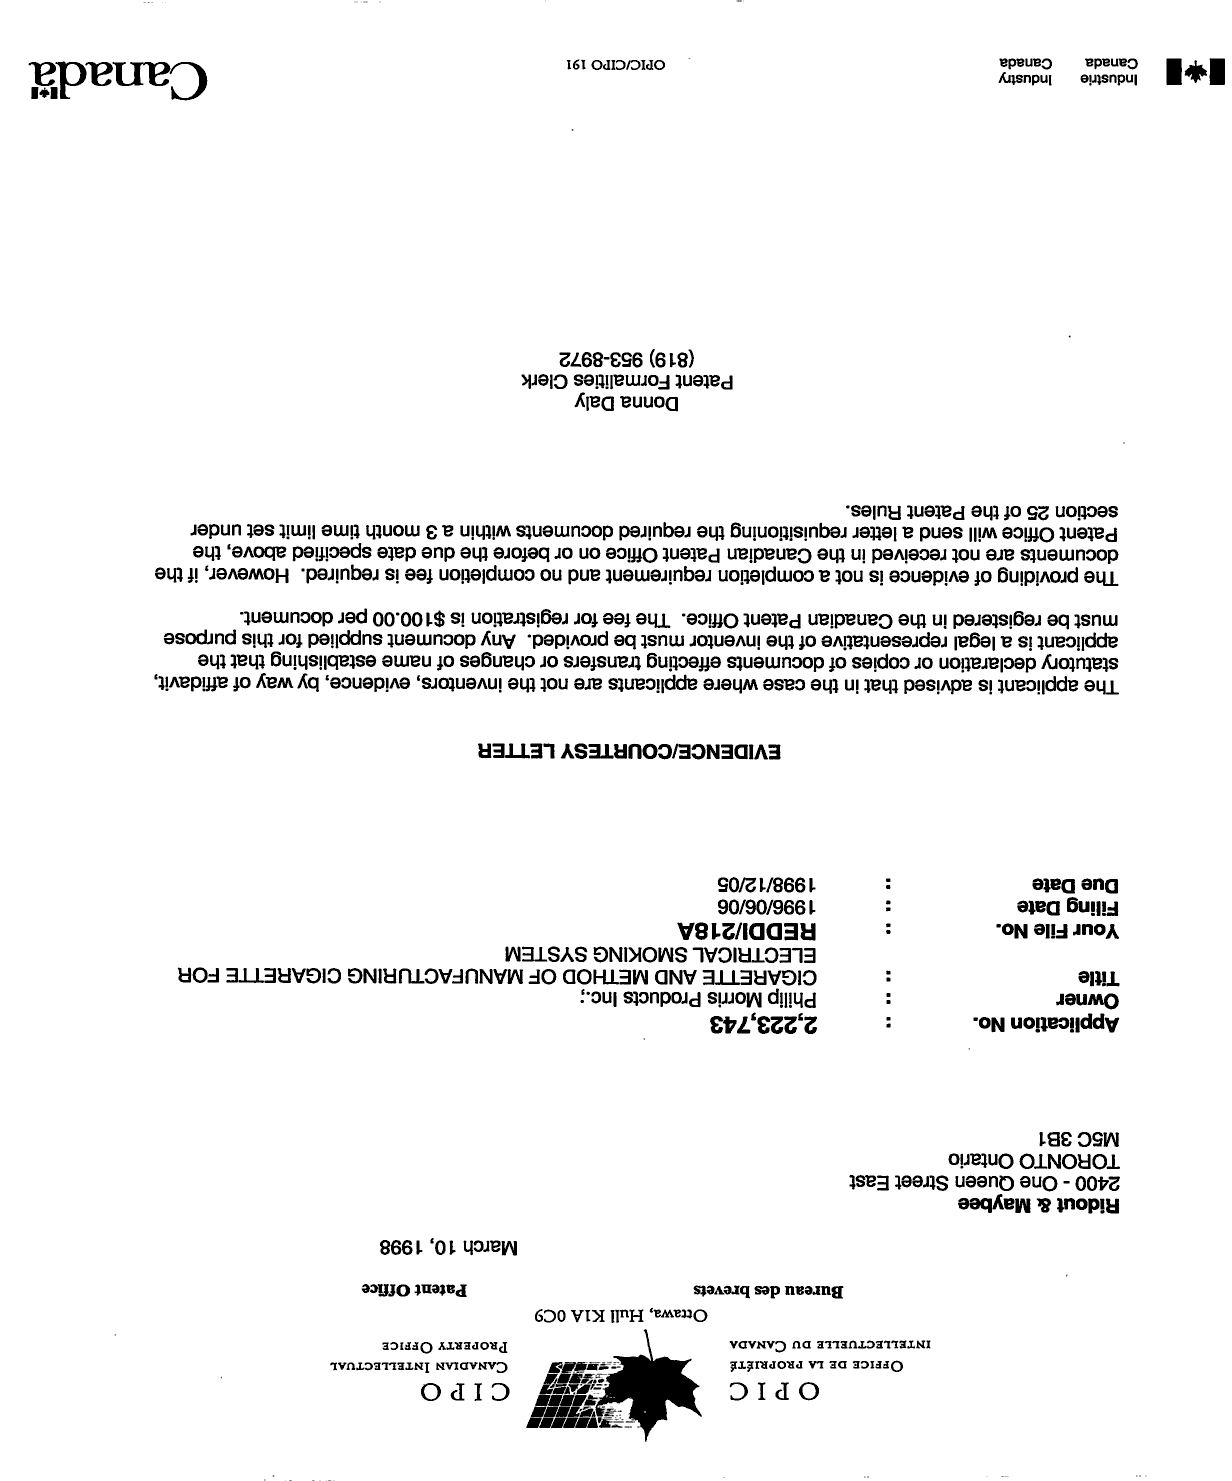 Canadian Patent Document 2223743. Correspondence 19980310. Image 1 of 1